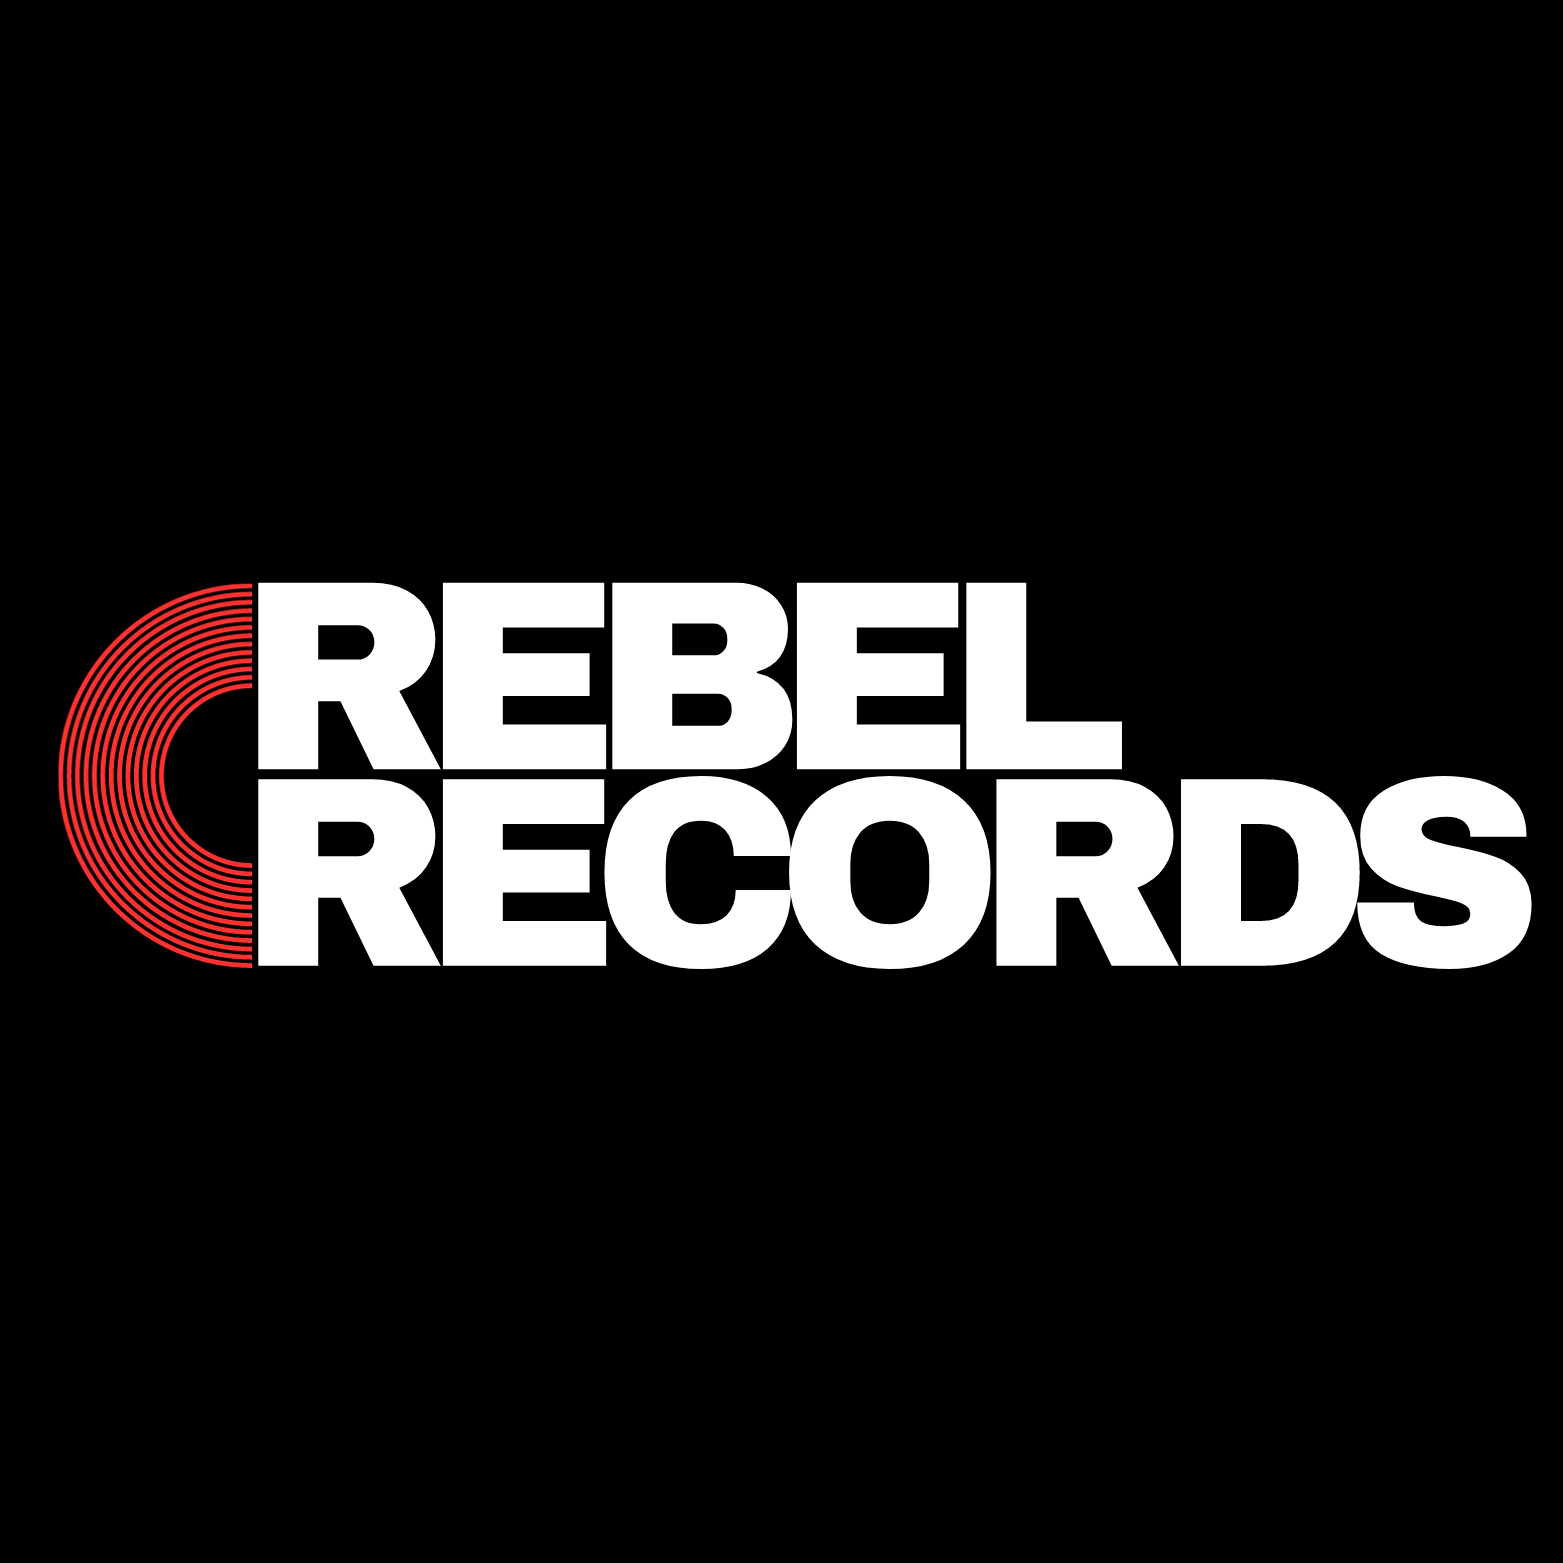 Rebel records company logo